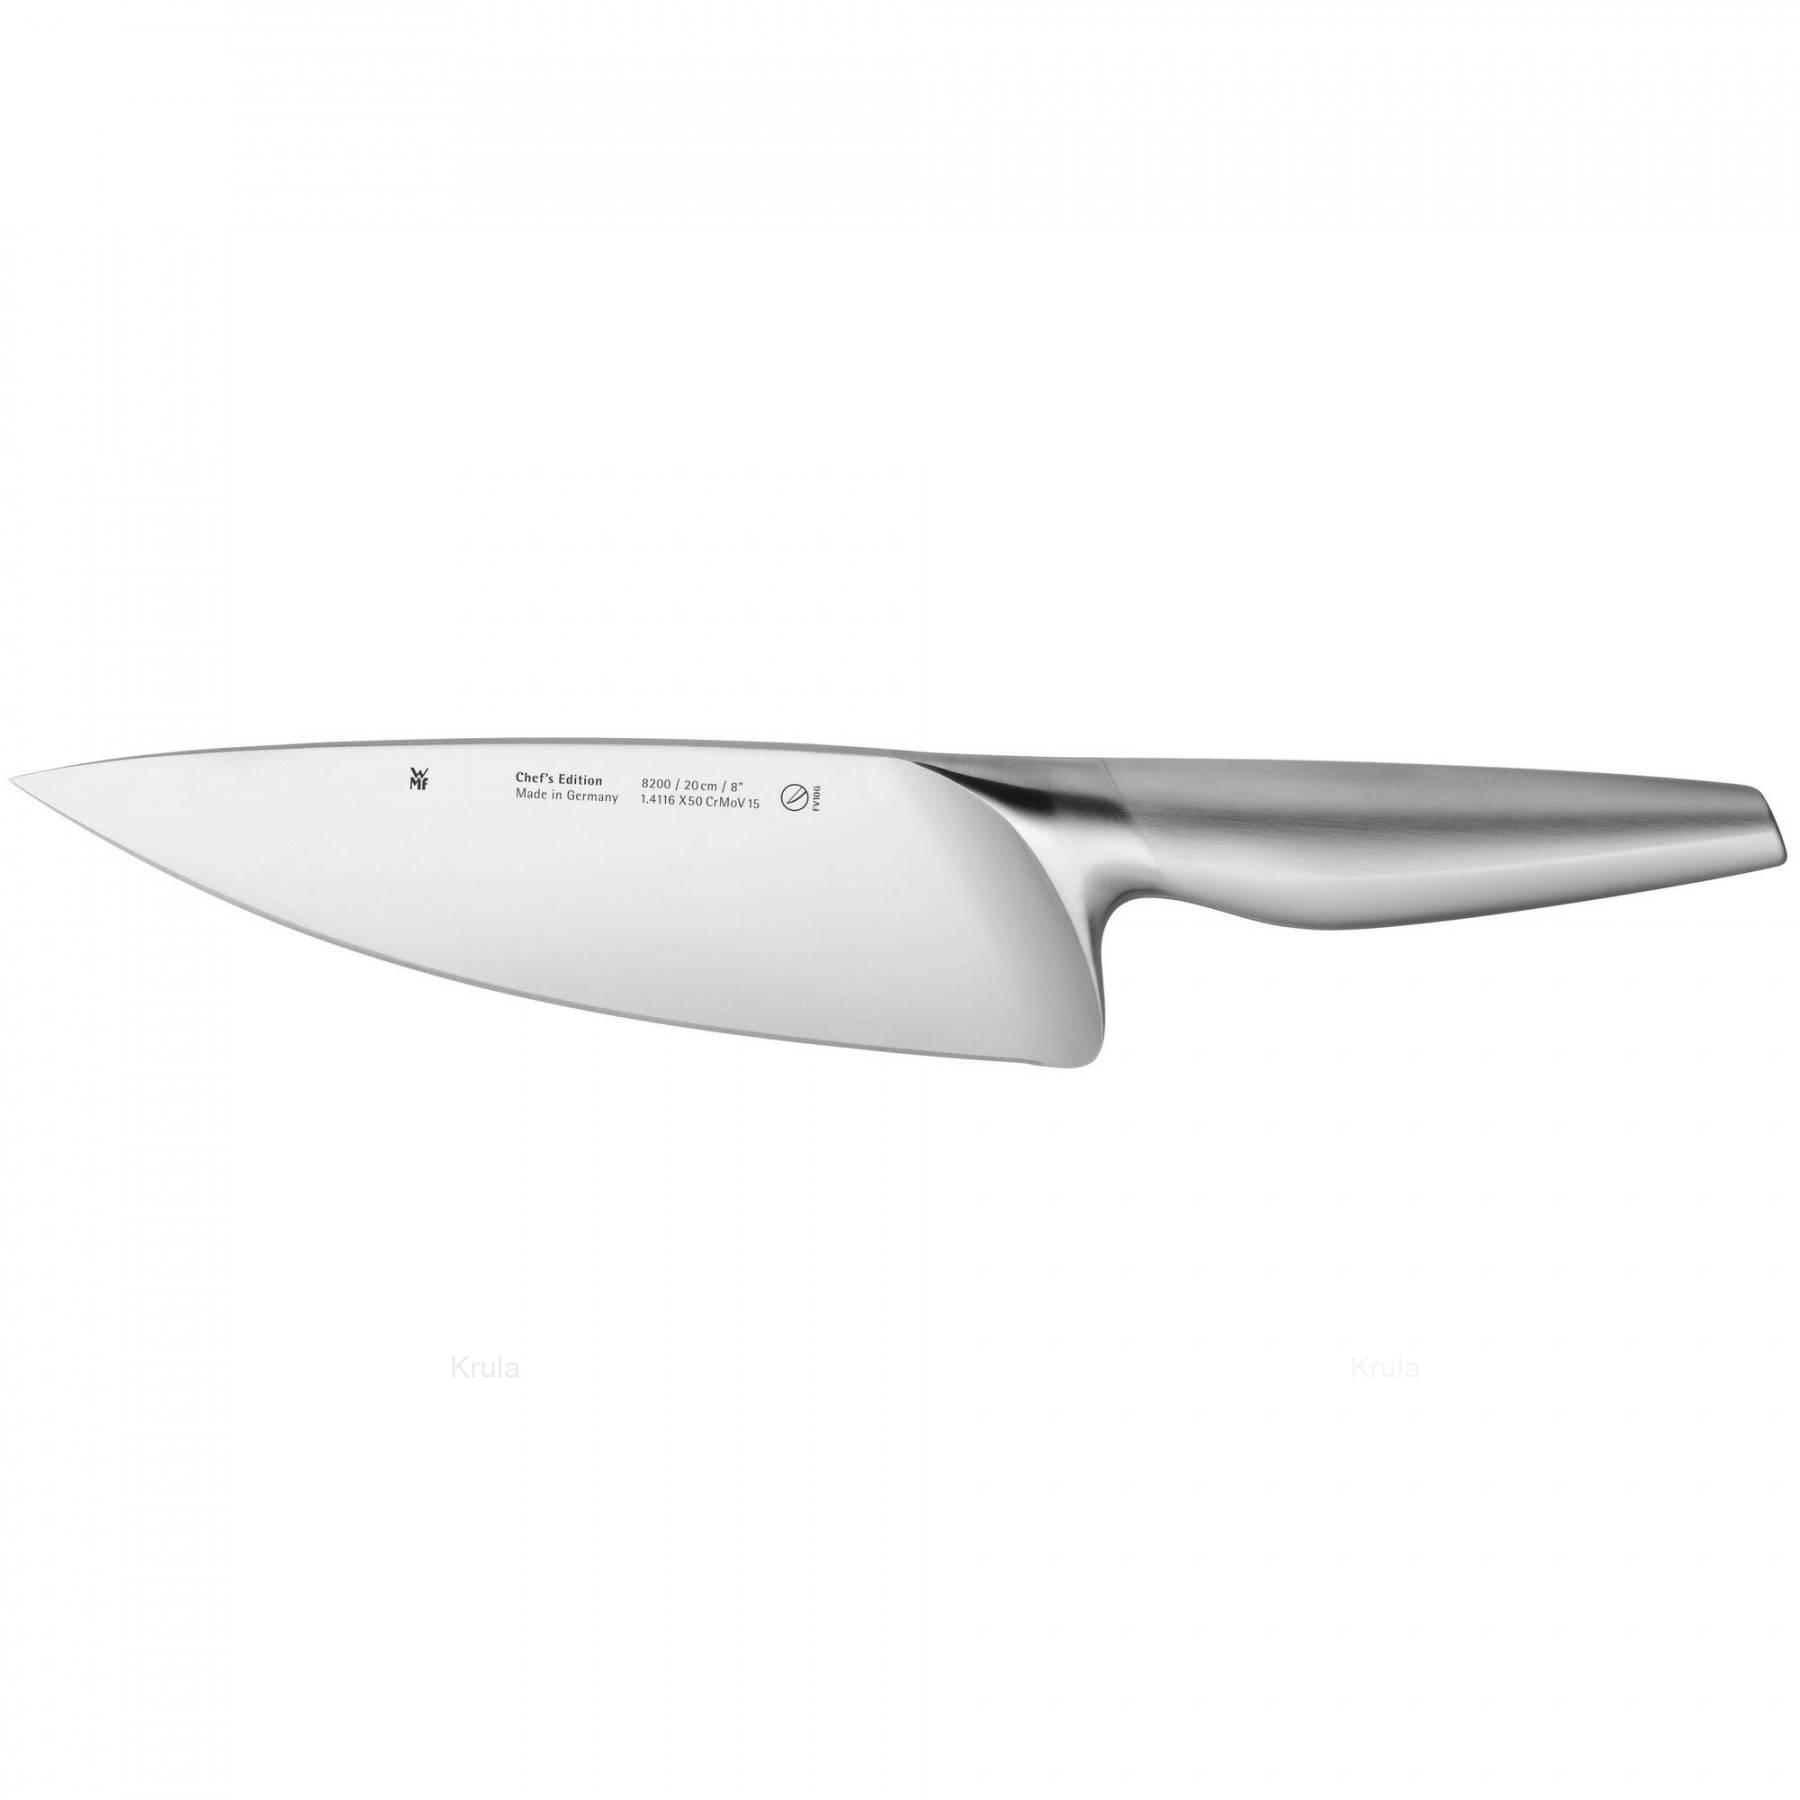 Kuchařský nůž Chef's Edition, Performance Cut, 20 cm - WMF